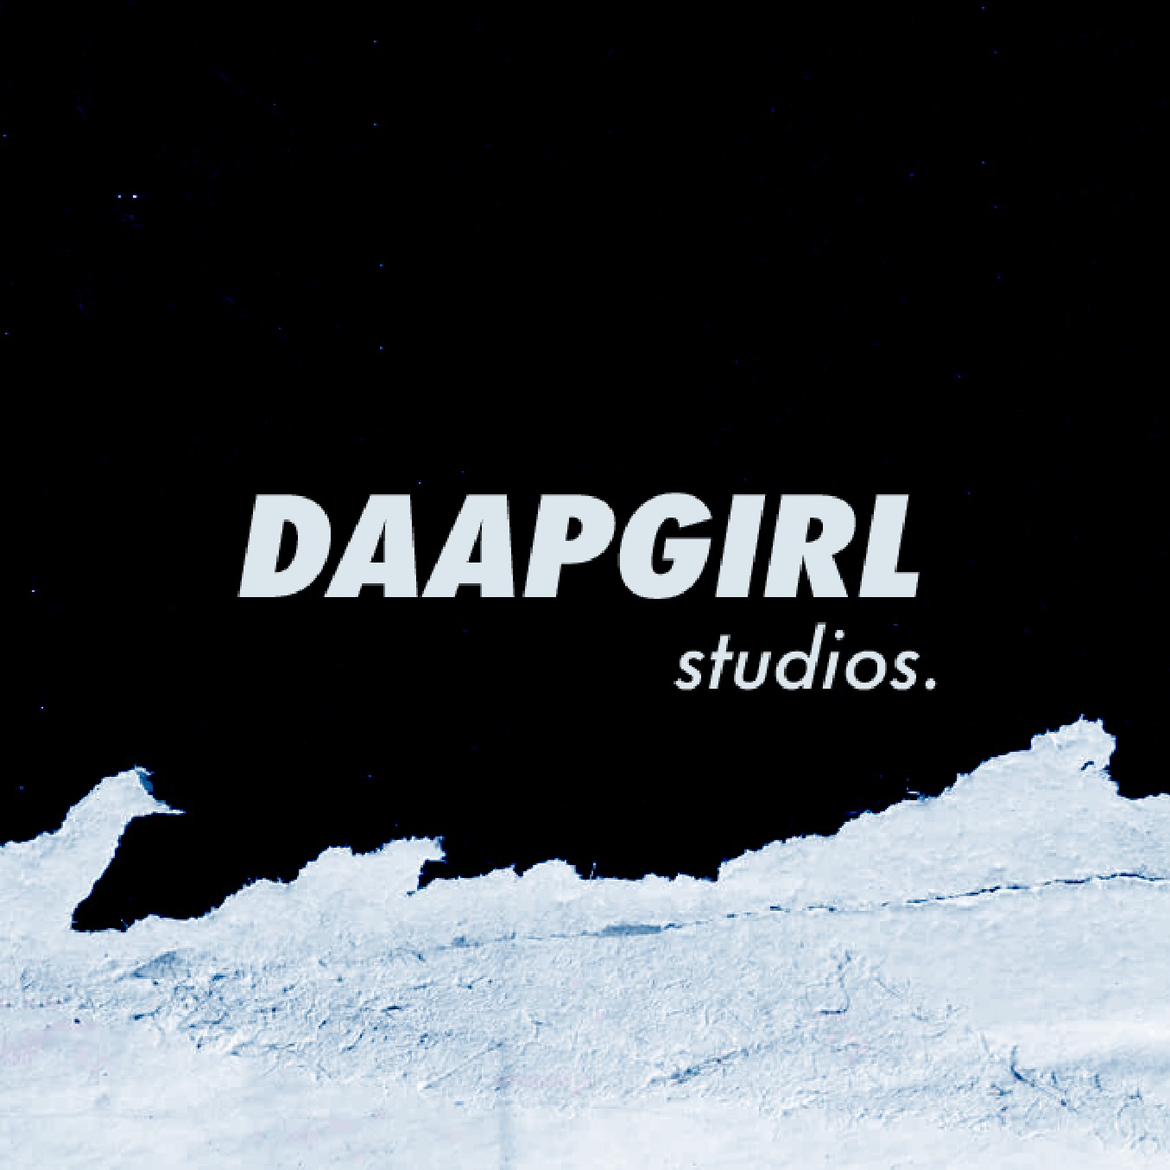 DAAPGIRLstudios's images